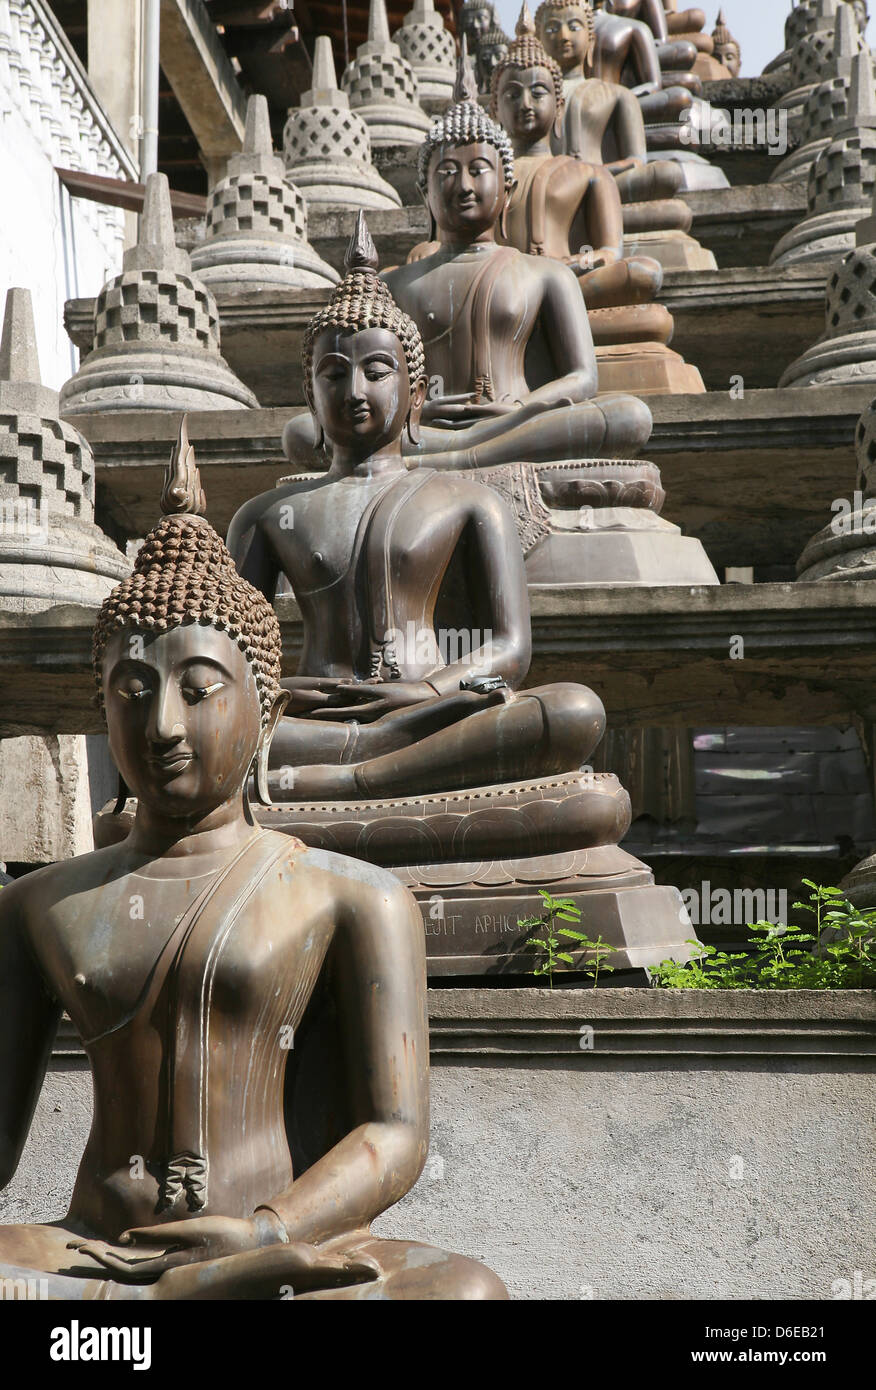 Statues of the Buddha in the lotus position, Gangaramaya Buddhist Temple, Colombo, Sri Lanka Stock Photo